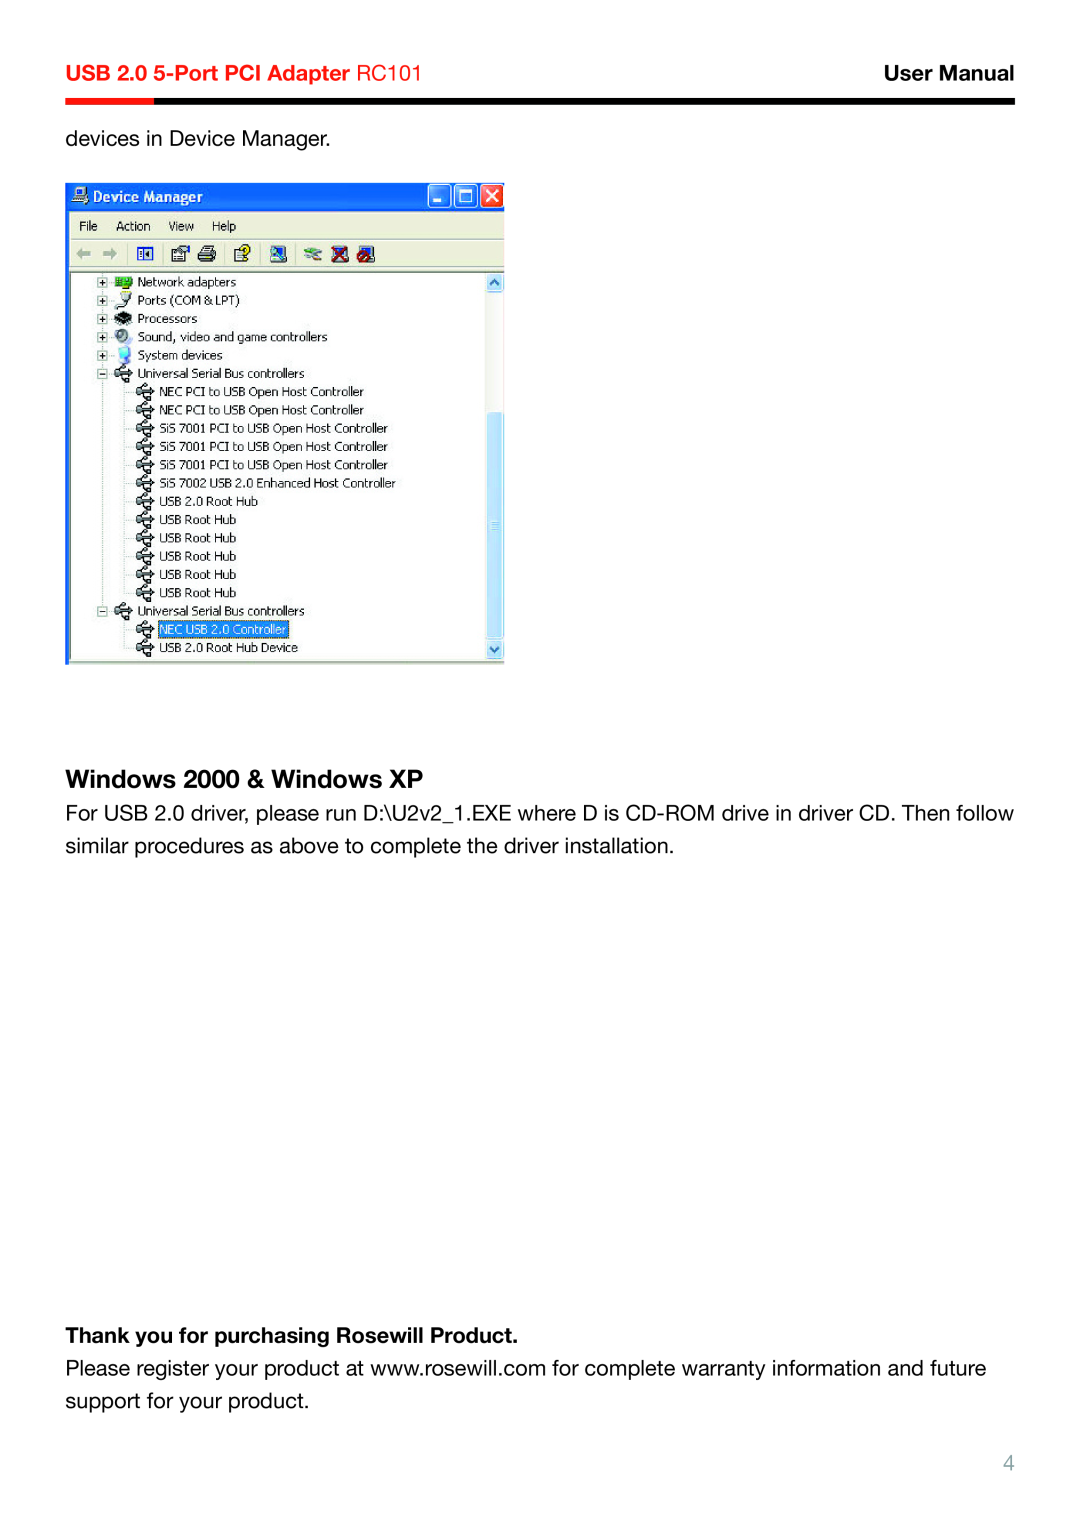 Rosewill RC-101 user manual Windows 2000 & Windows XP, USB 2.0 5-Port PCI Adapter RC101, User Manual 